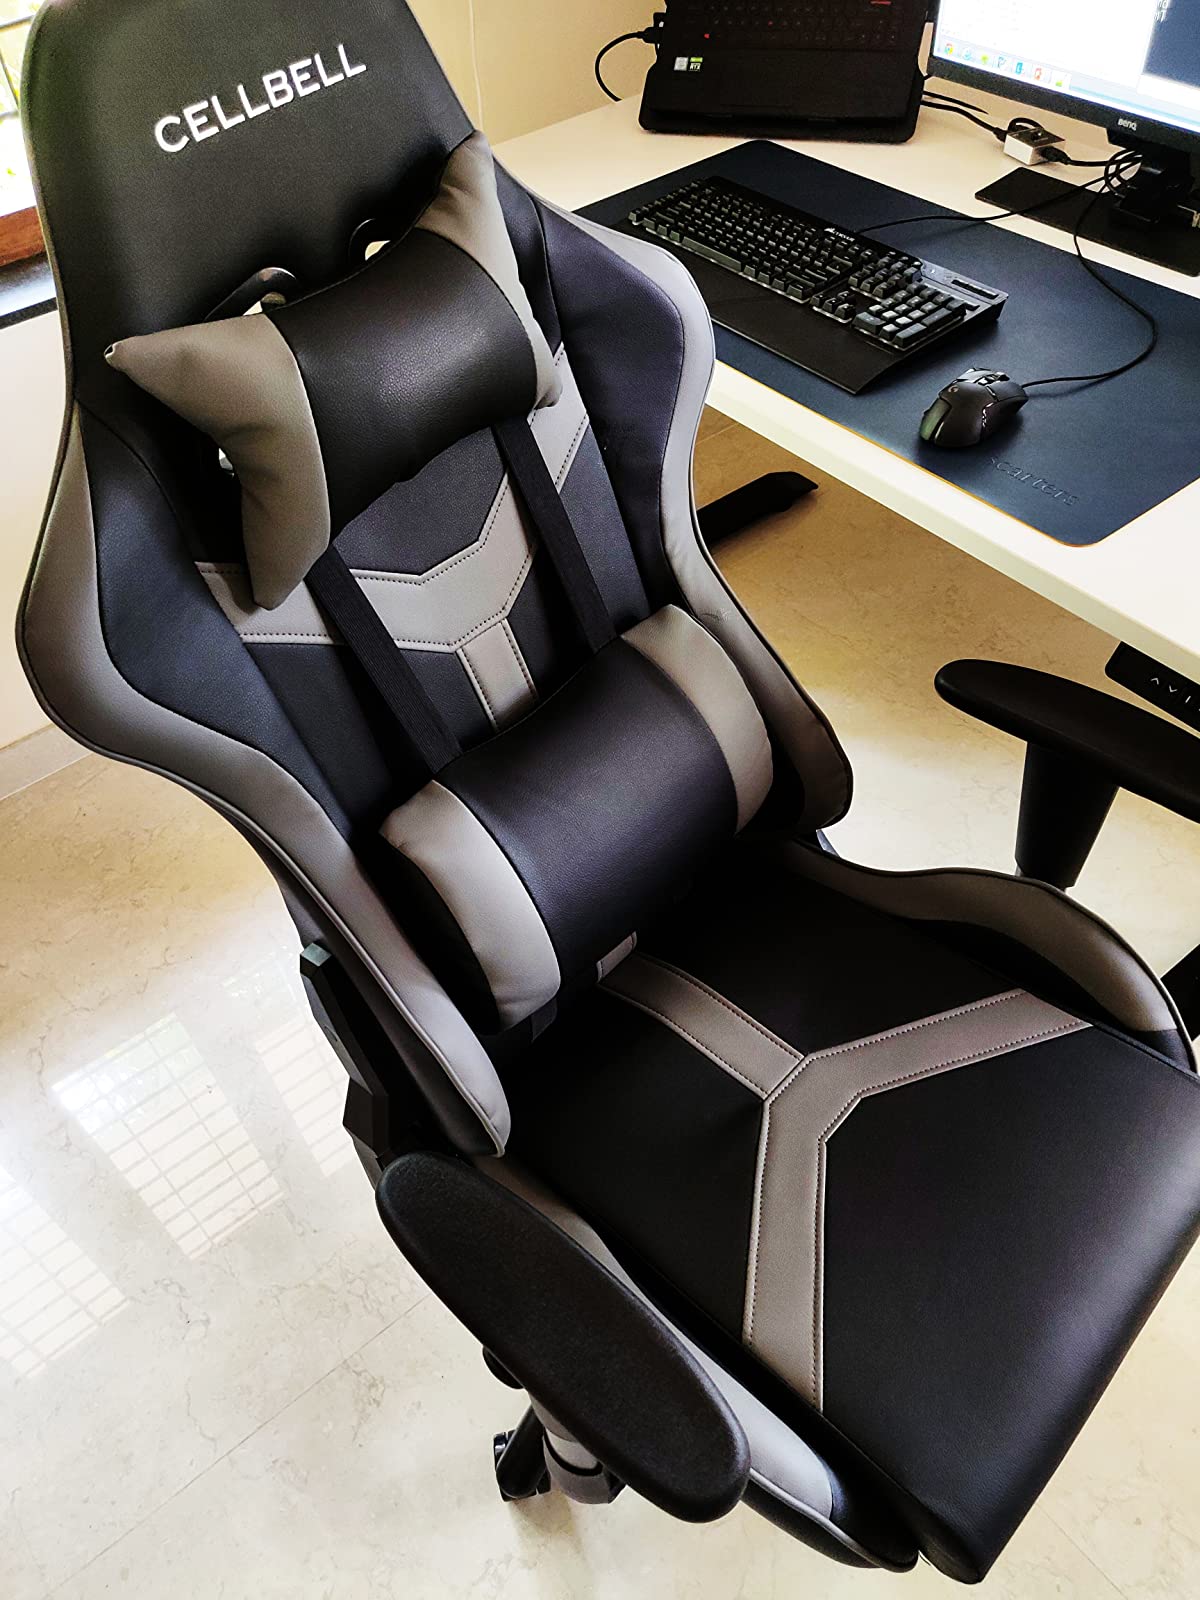 transformer series gaming chair